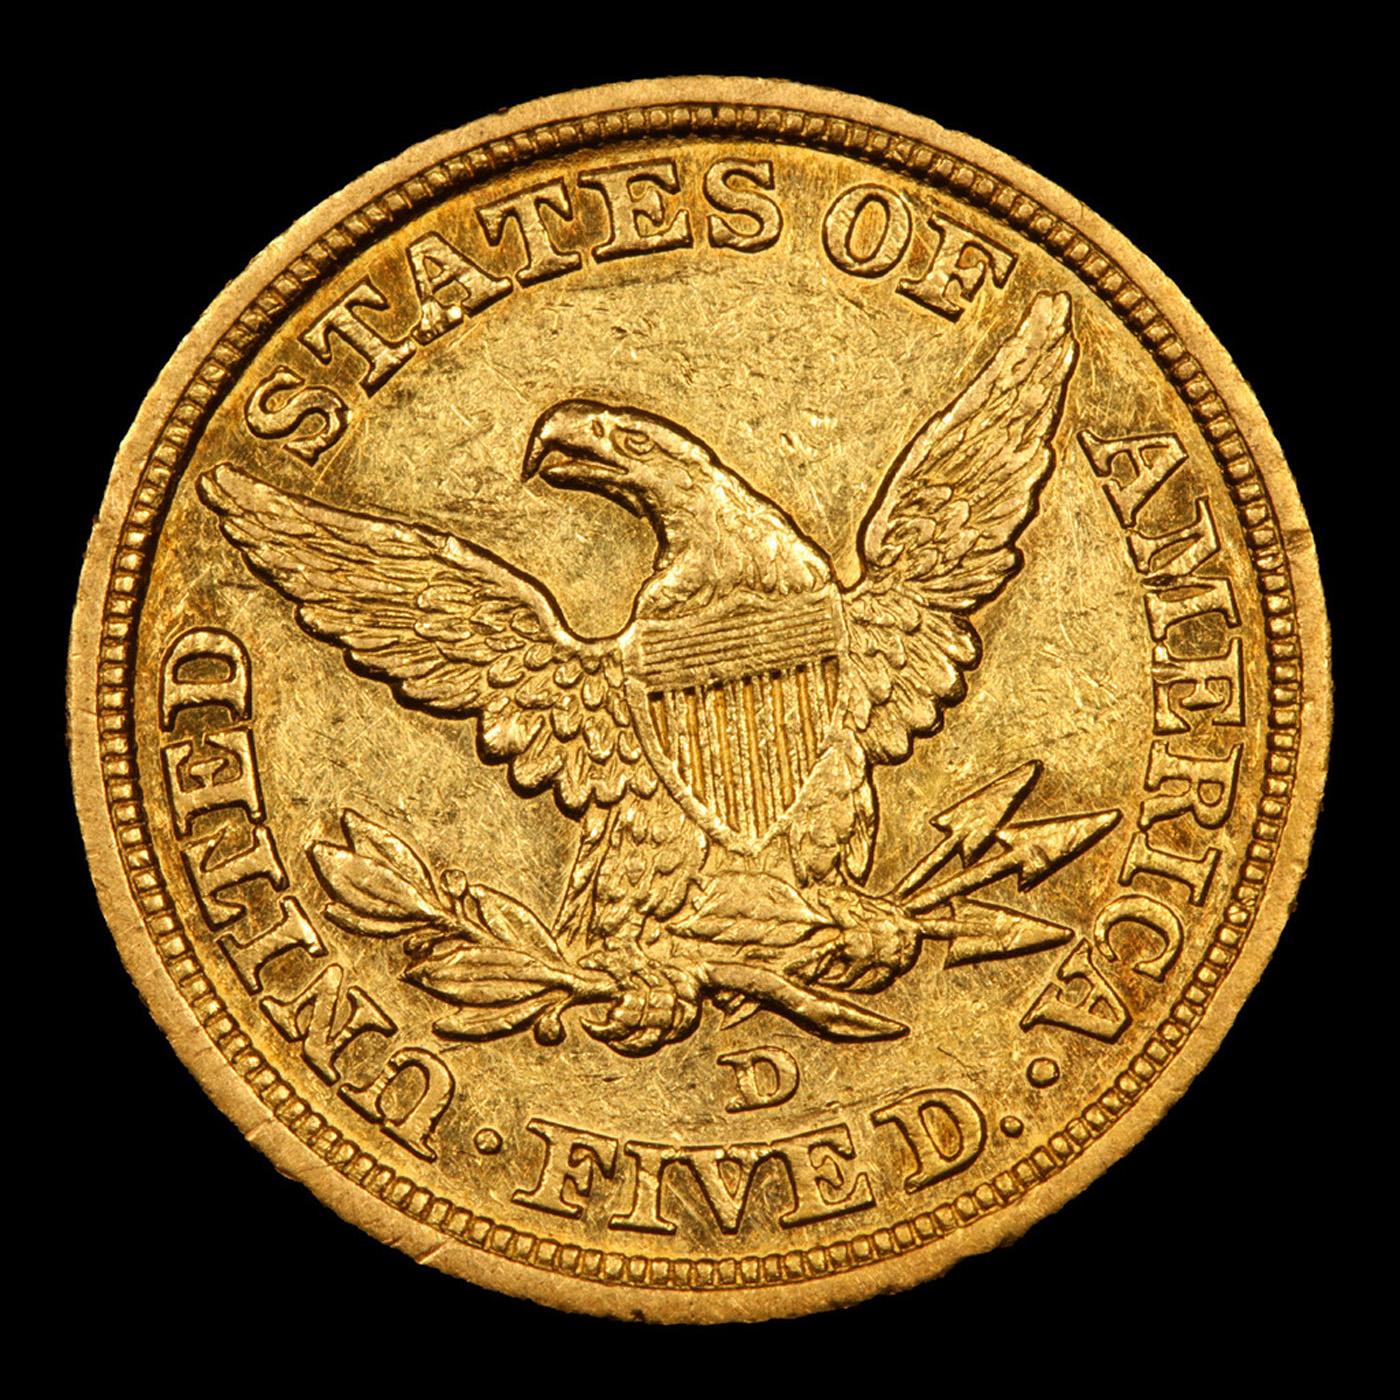 ***Auction Highlight*** 1843-d Dahlonega Gold Liberty Half Eagle $5 Graded BU+ By USCG (fc)